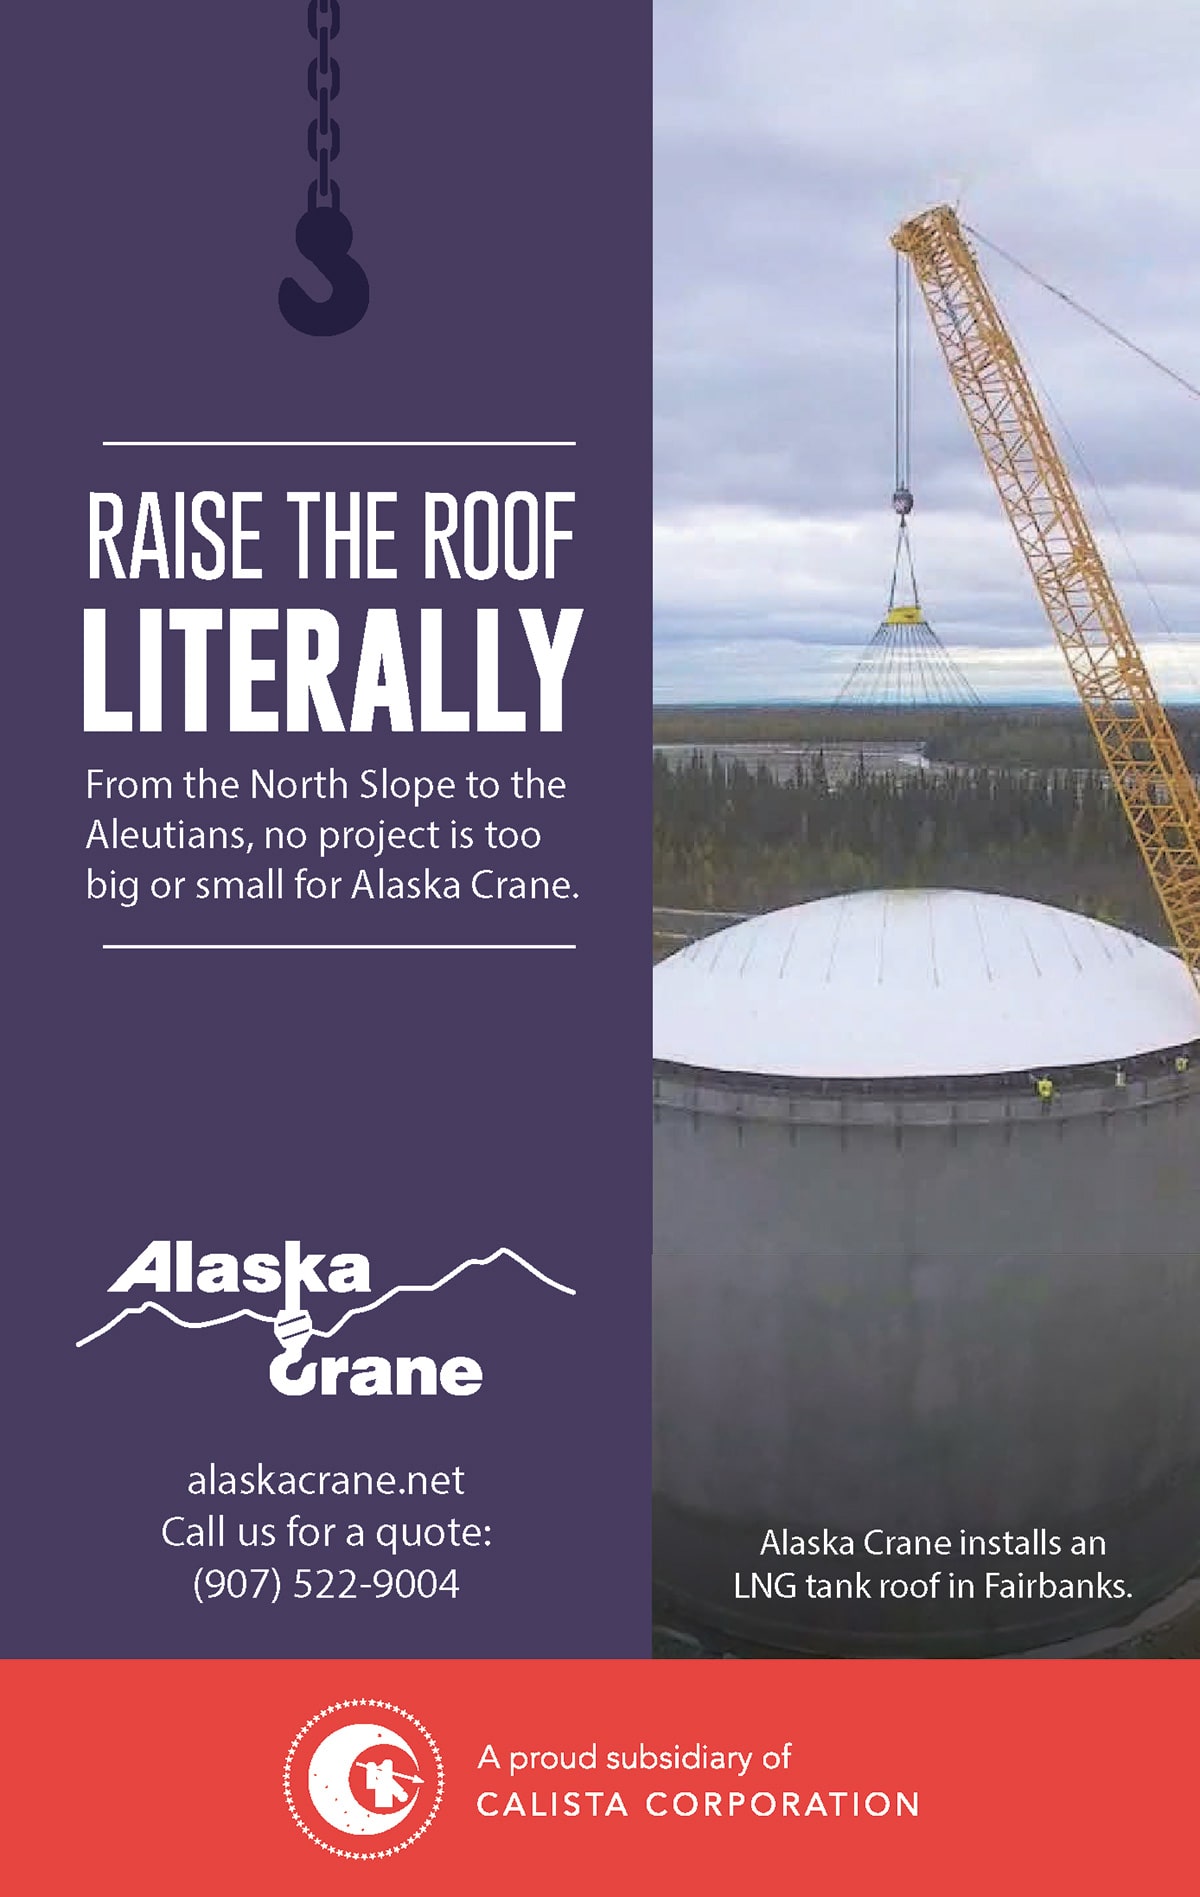 Alaska Crane